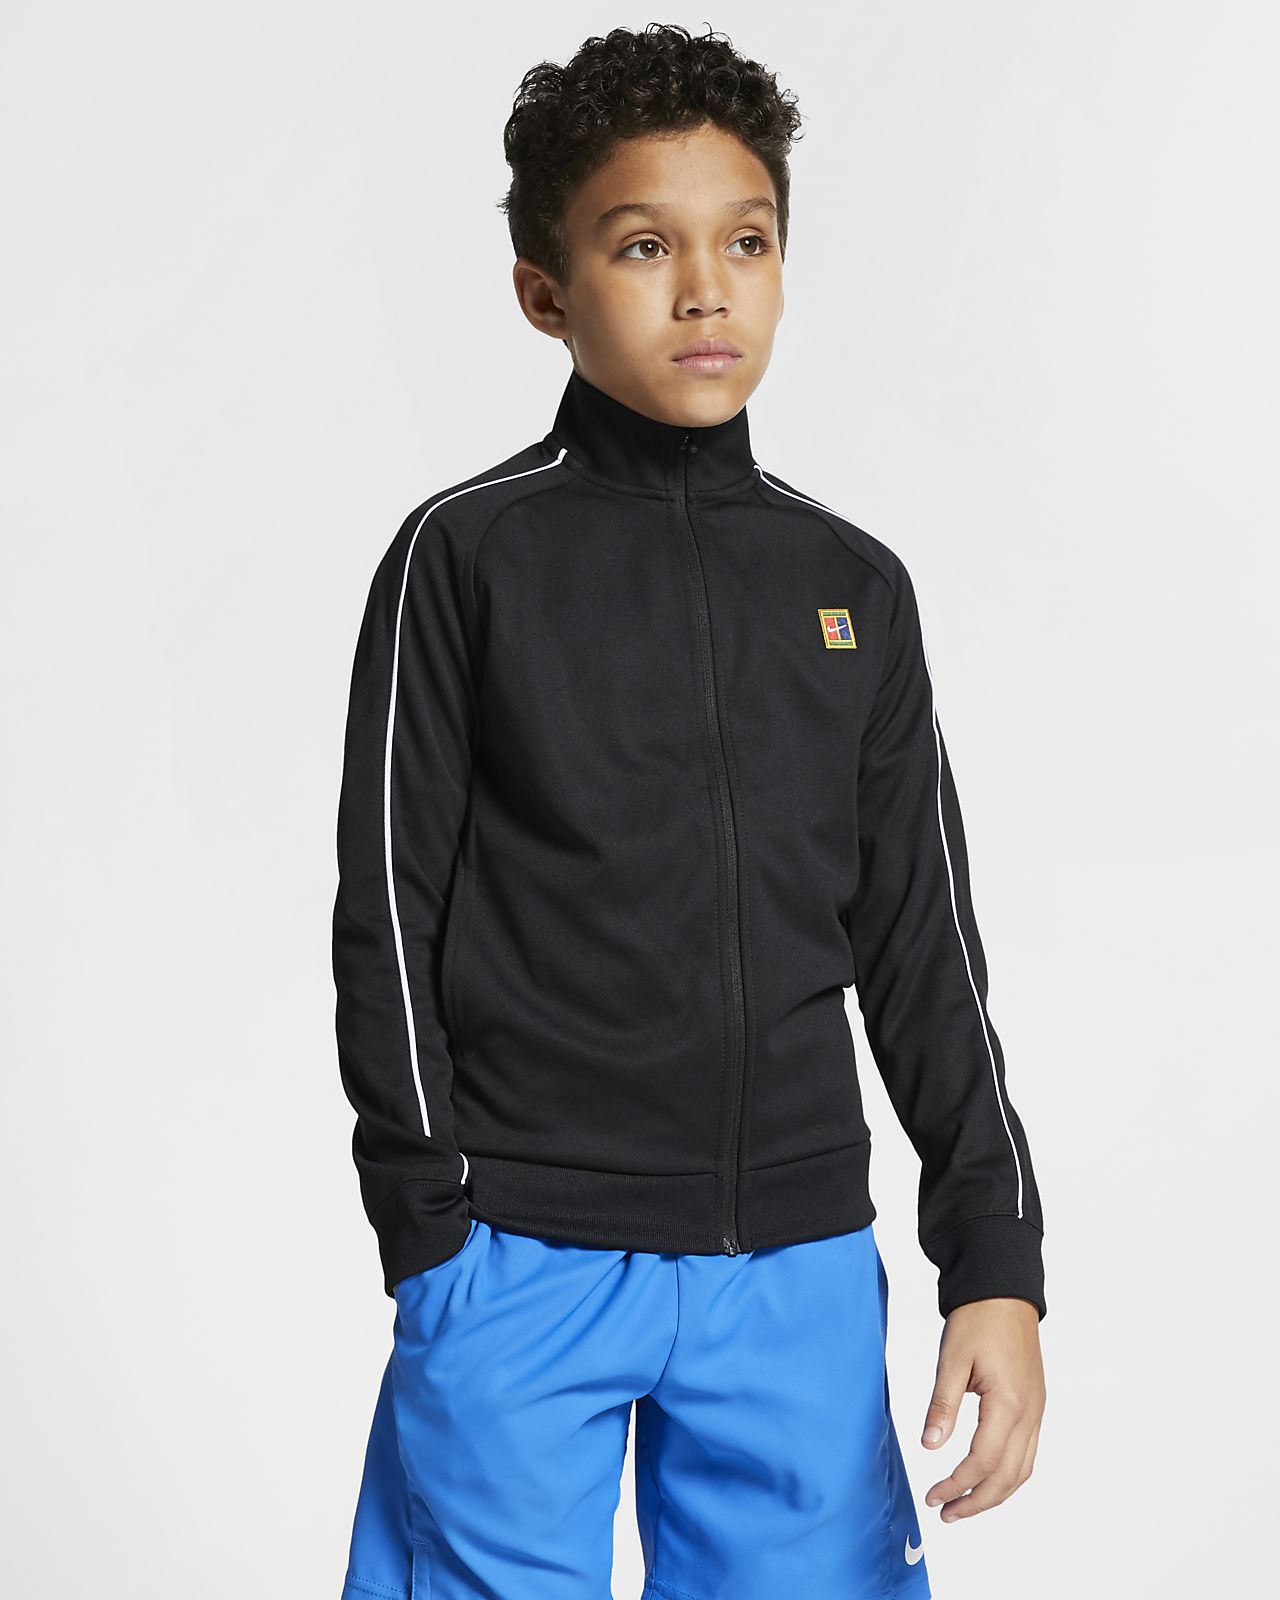 NikeCourt Boys' Tennis Warm-Up Jacket 